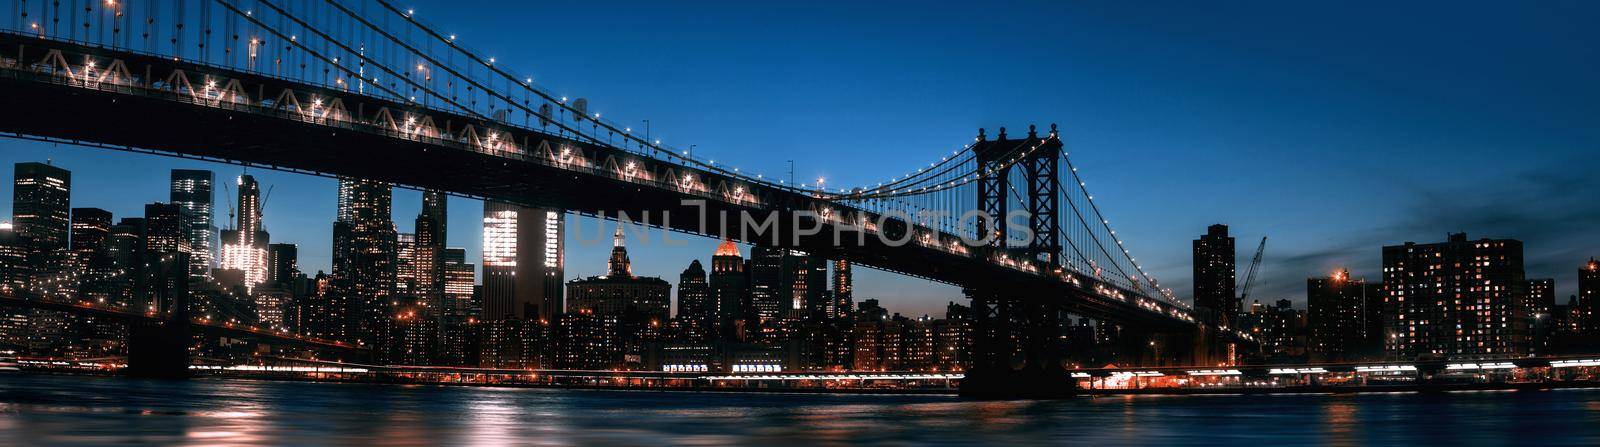 Manhattan skyline and Manhattan bridge silhouette at night. Manhattan bridge is a suspension bridge that crosses the East River in New York City. 